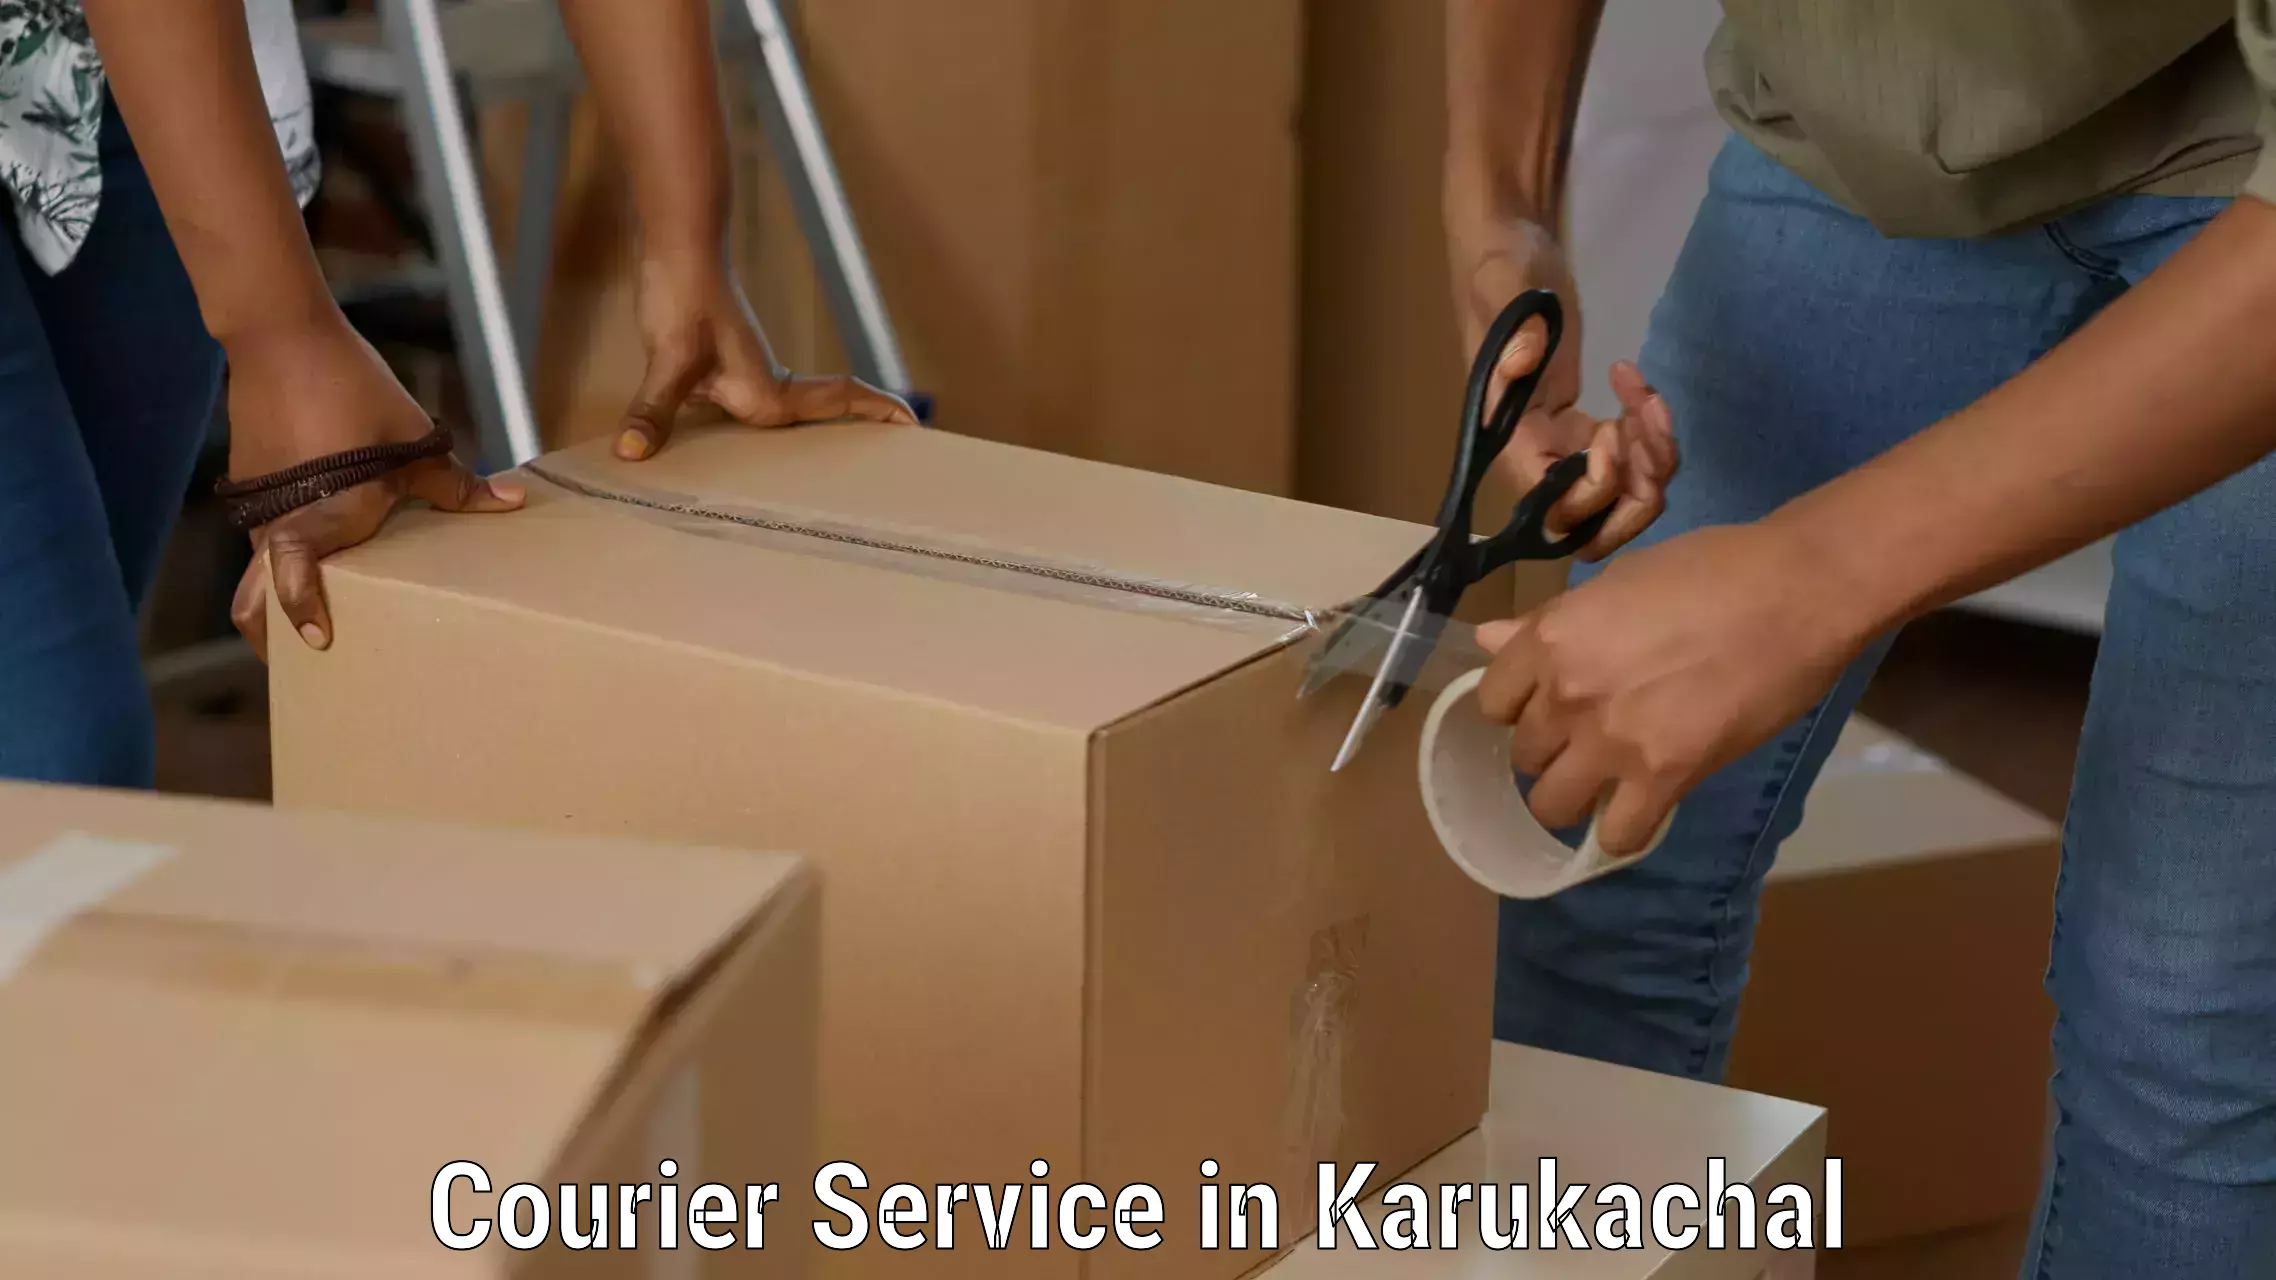 Express shipping in Karukachal